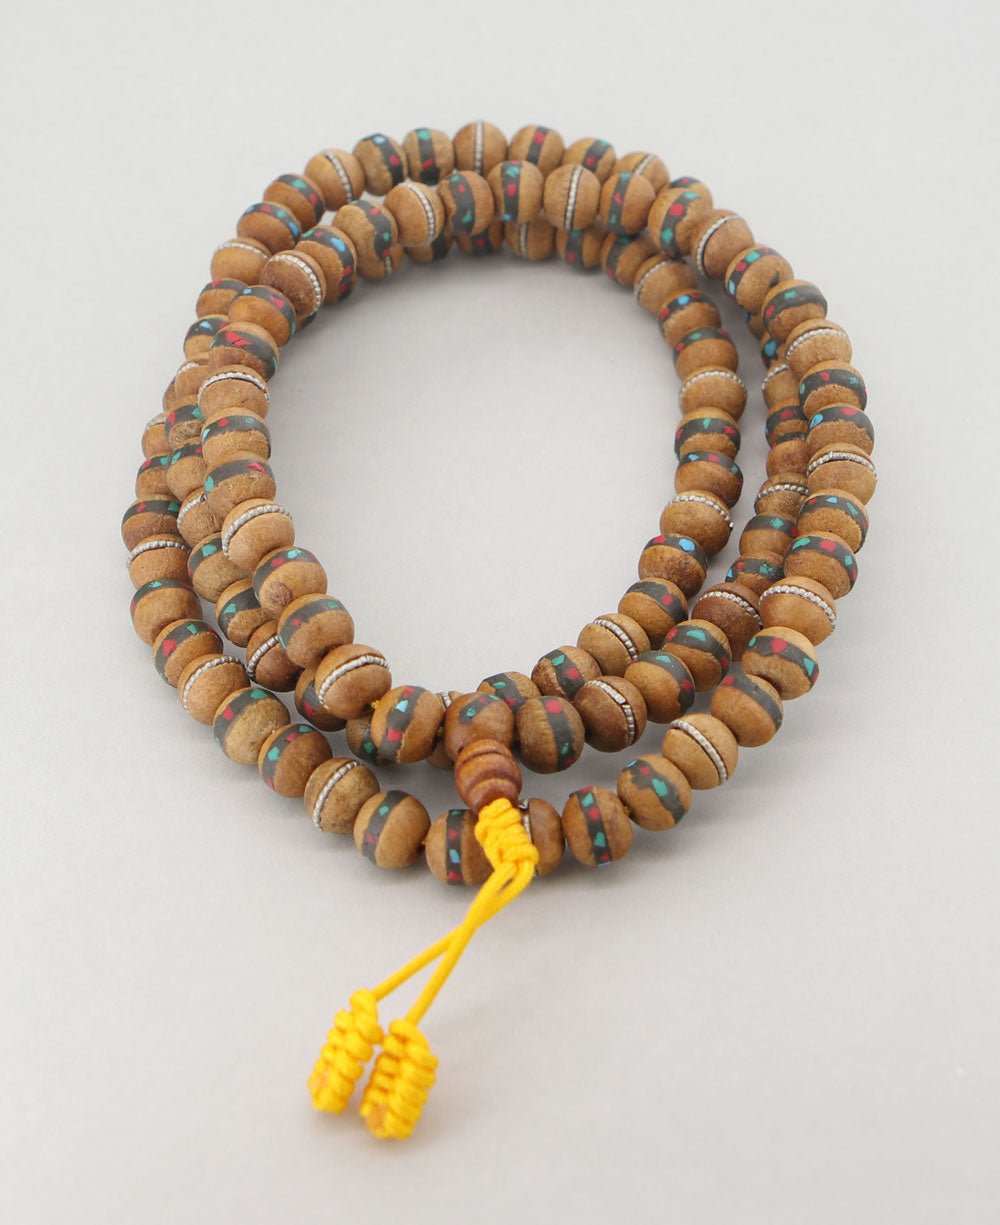 Tibetan Prayer Beads Bracelet: Illuminates the Path - Mantrapiececom